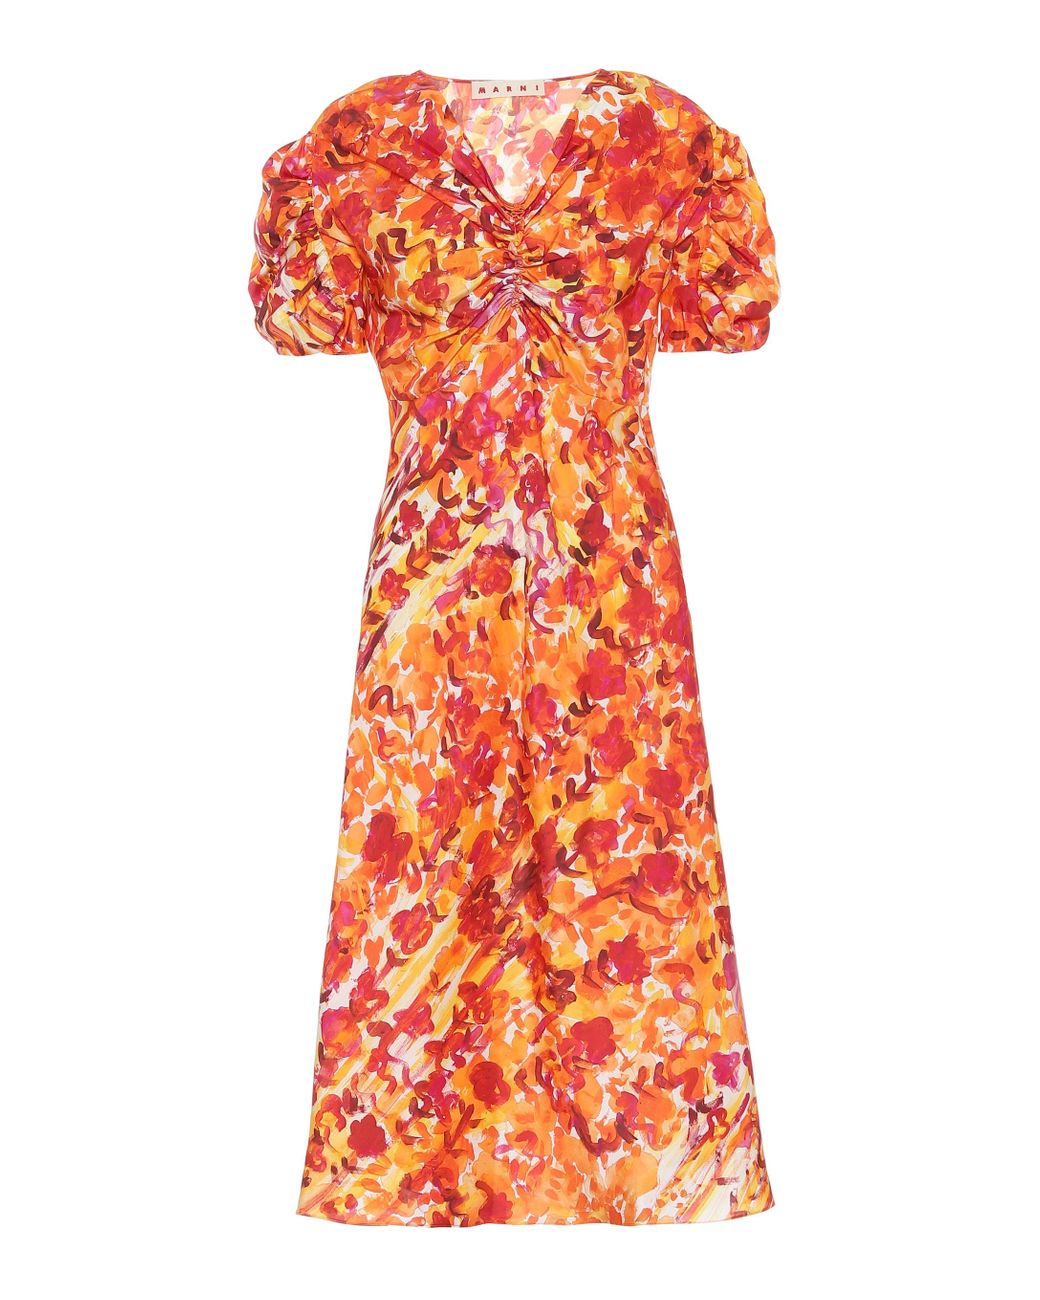 Marni Floral Silk Dress in Orange (Red) - Lyst